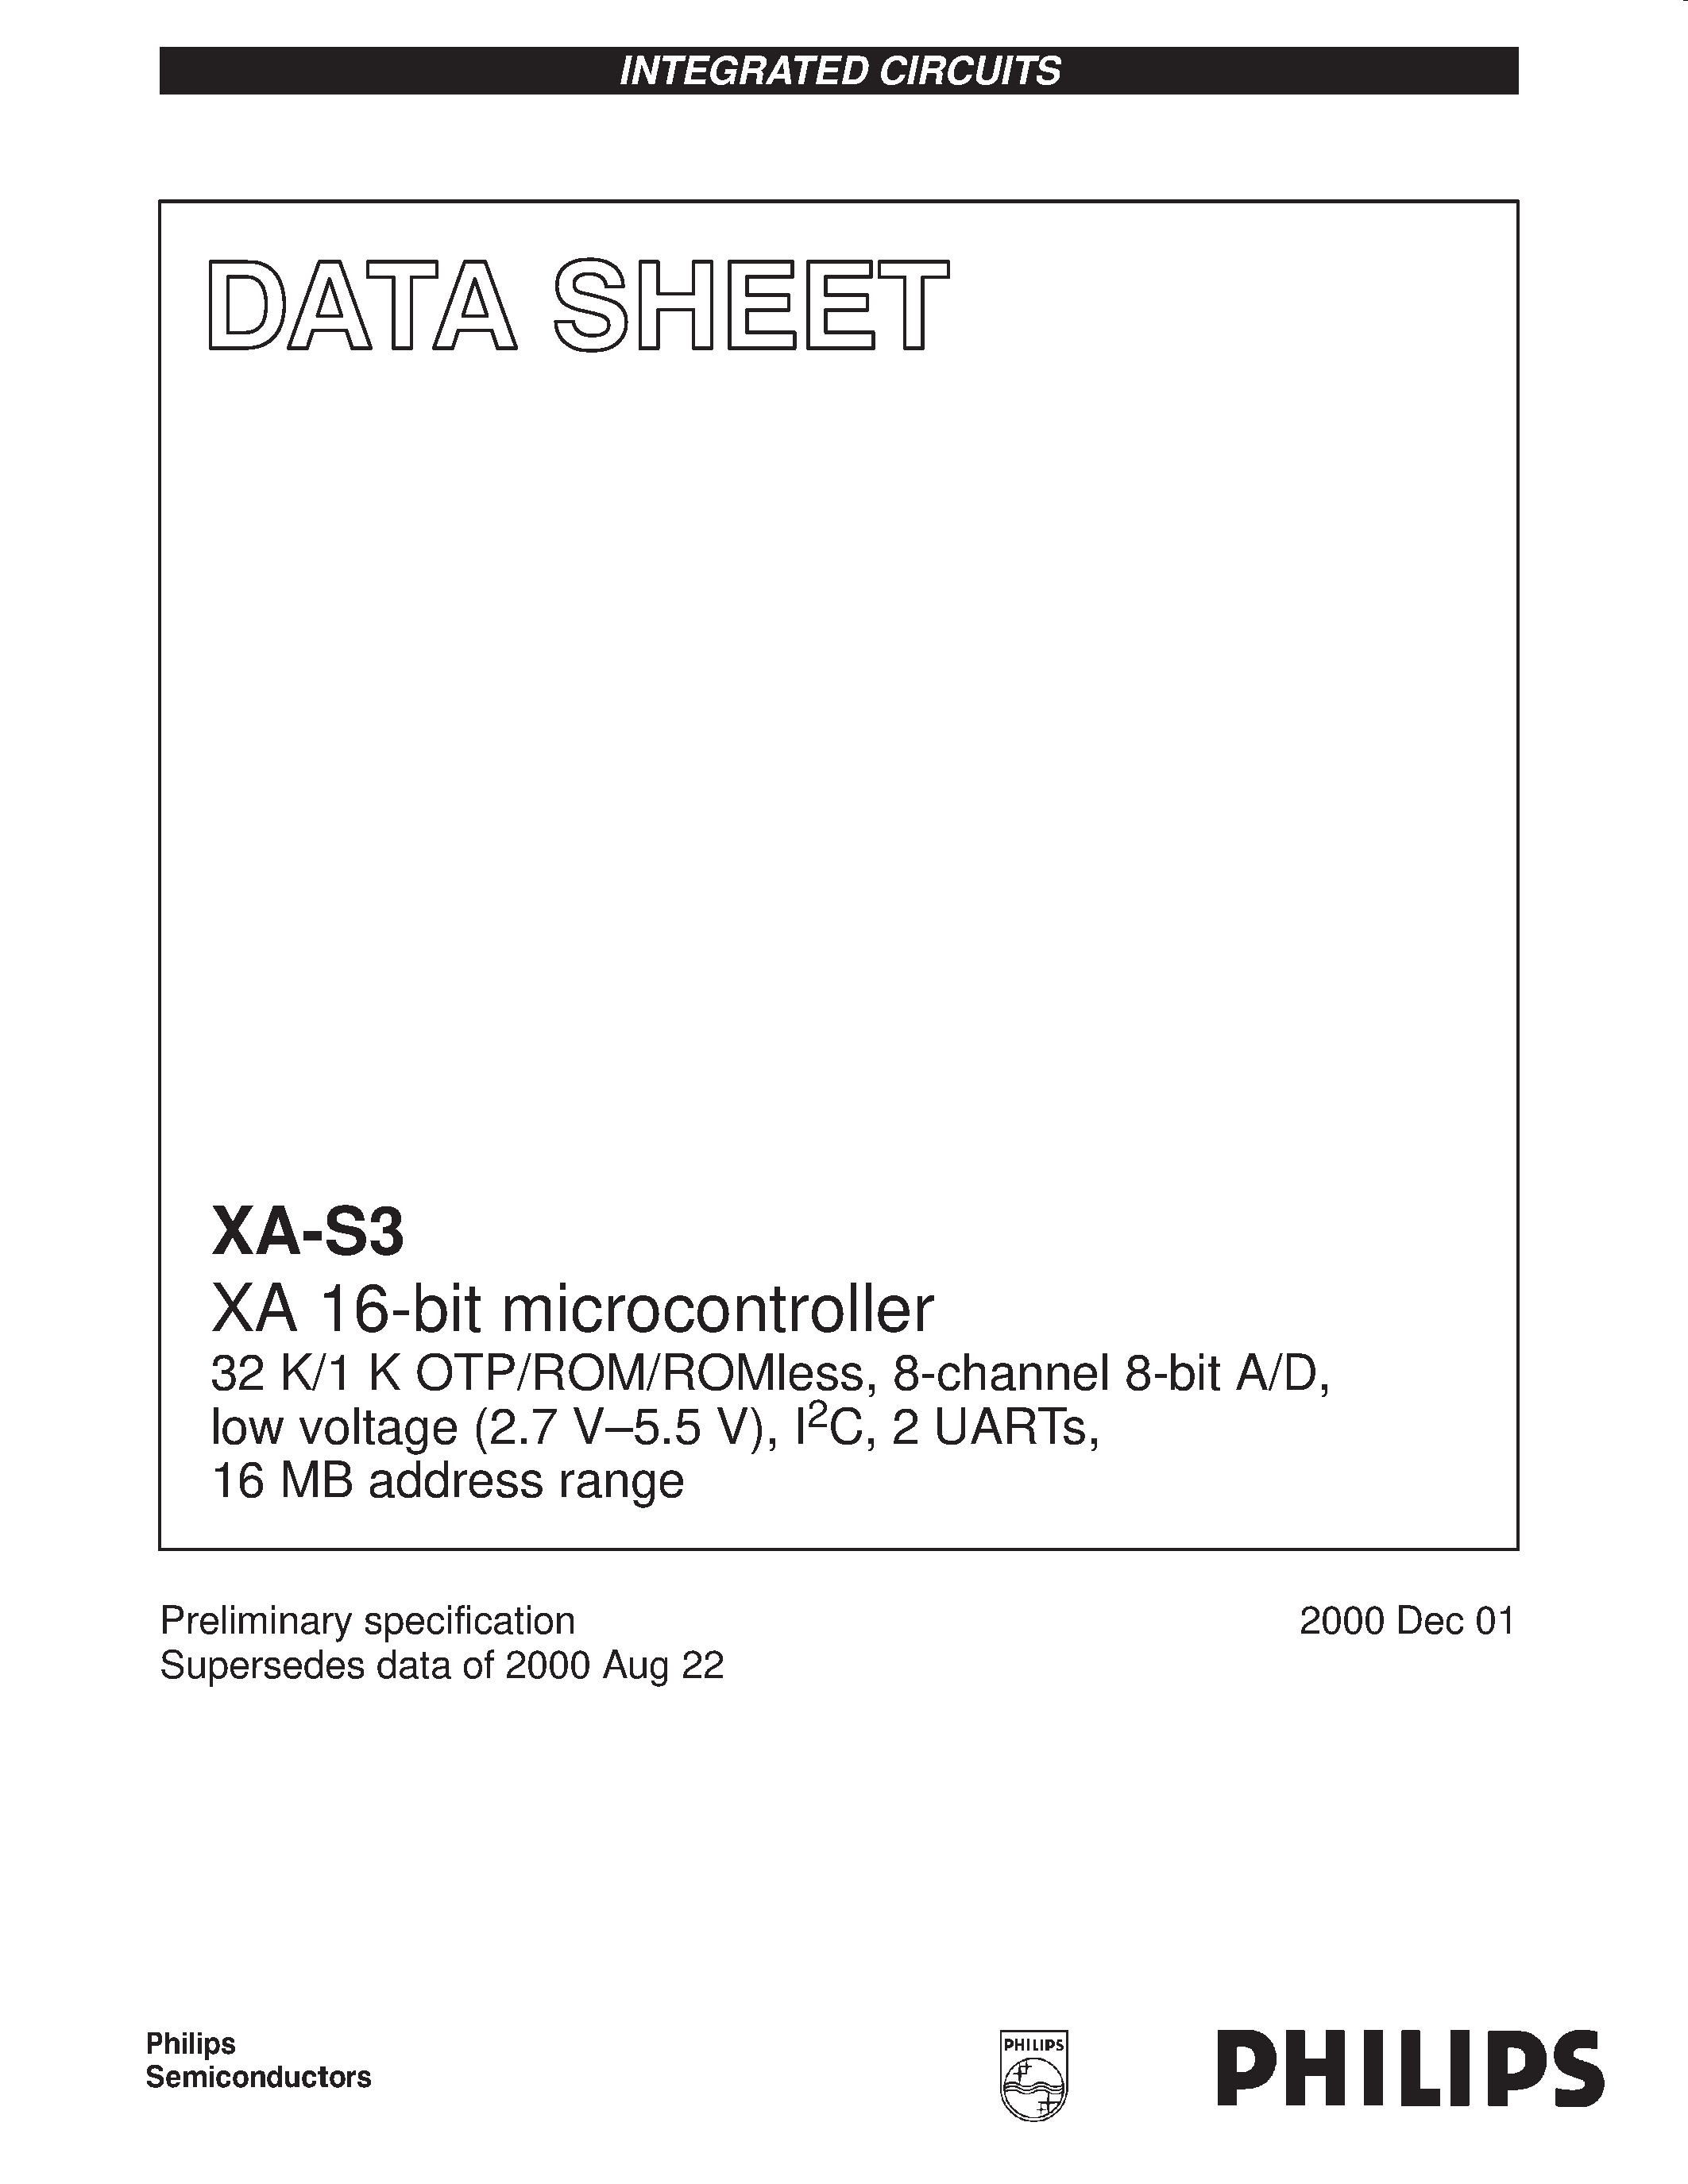 Datasheet XA-S3 - XA 16-bit microcontroller 32K/1K OTP/ROM/ROMless/ 8-channel 8-bit A/D/ low voltage 2.7 V.5.5 V/ I2C/ 2 UARTs/ 16MB address range page 1